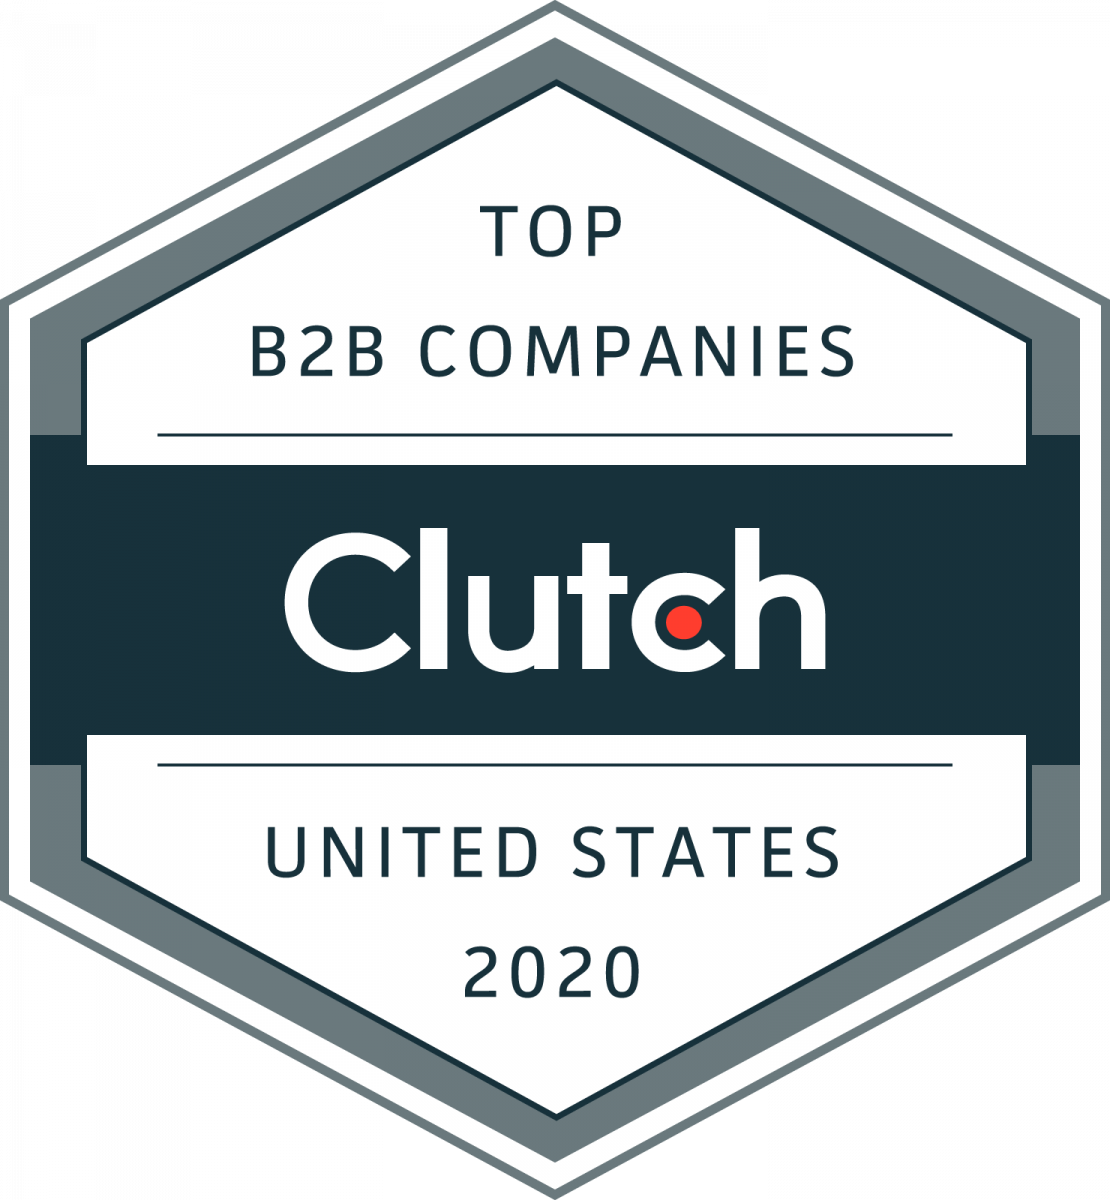 Top B2B Companies United States